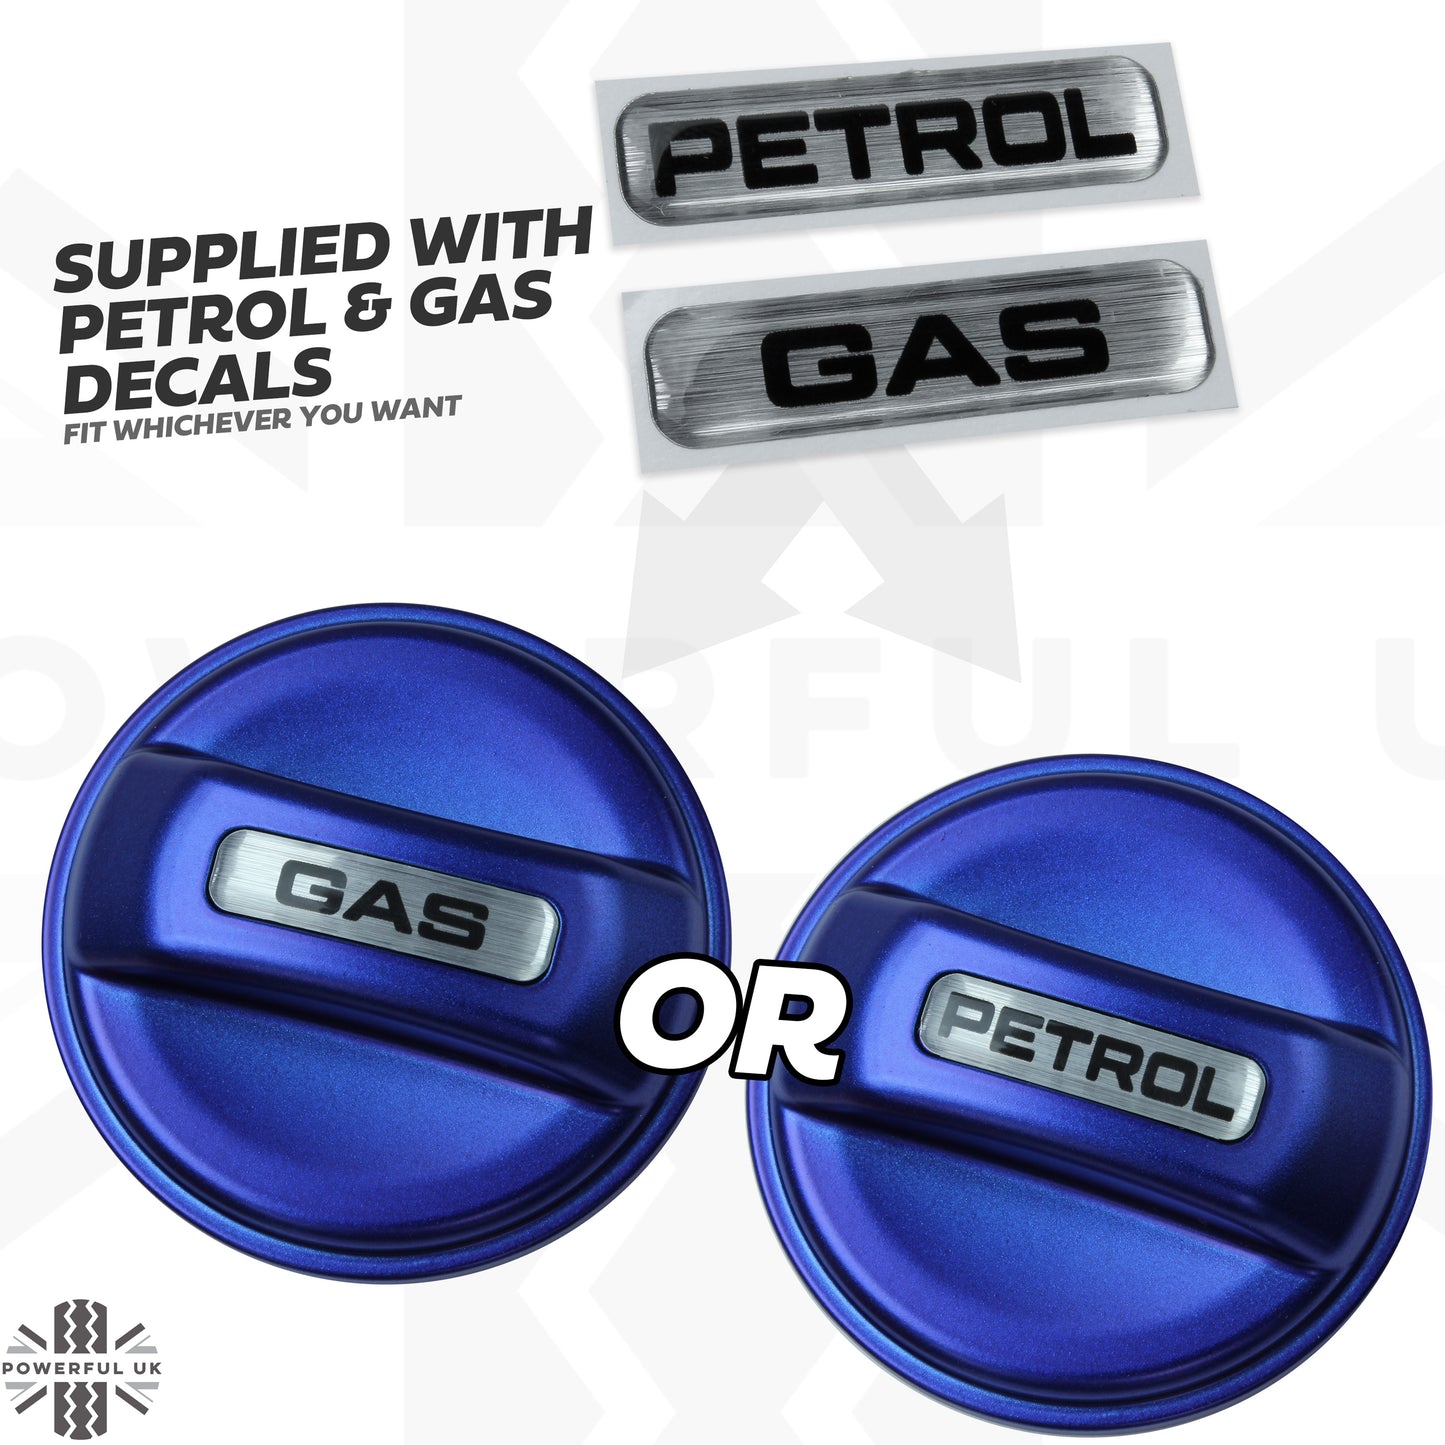 Fuel Filler Cap Cover - Petrol (NON-Vented) - Blue - for Jaguar XF